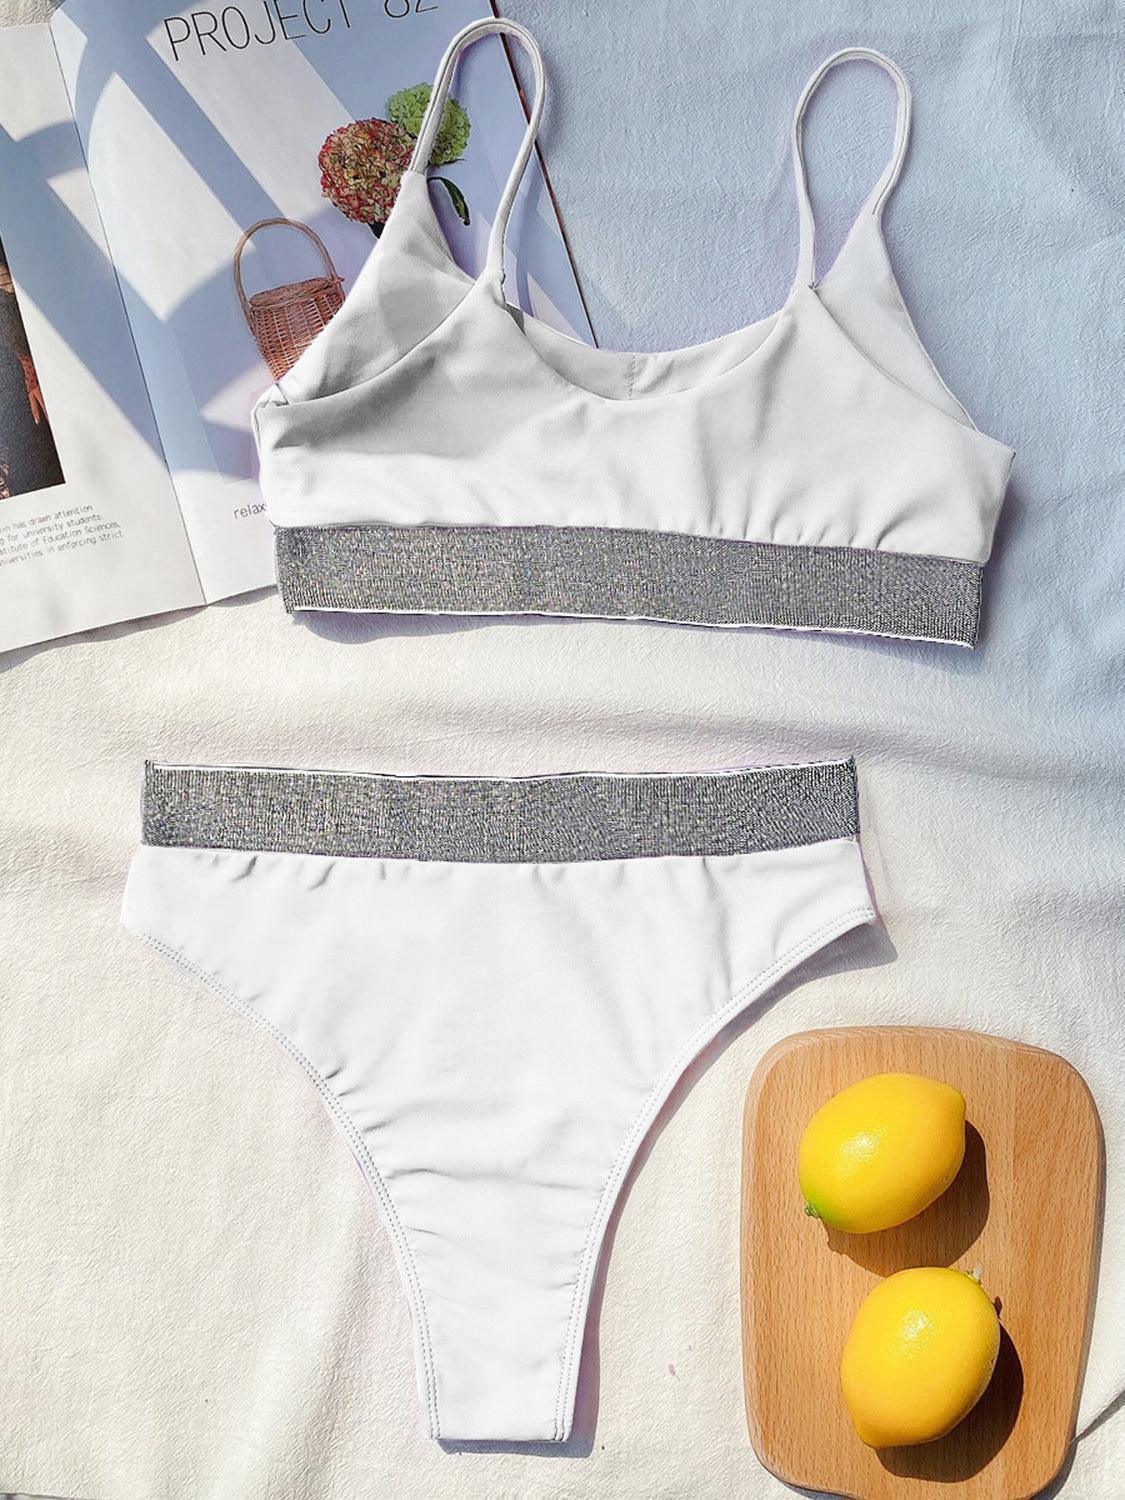 a bikini top and two lemons on a bed